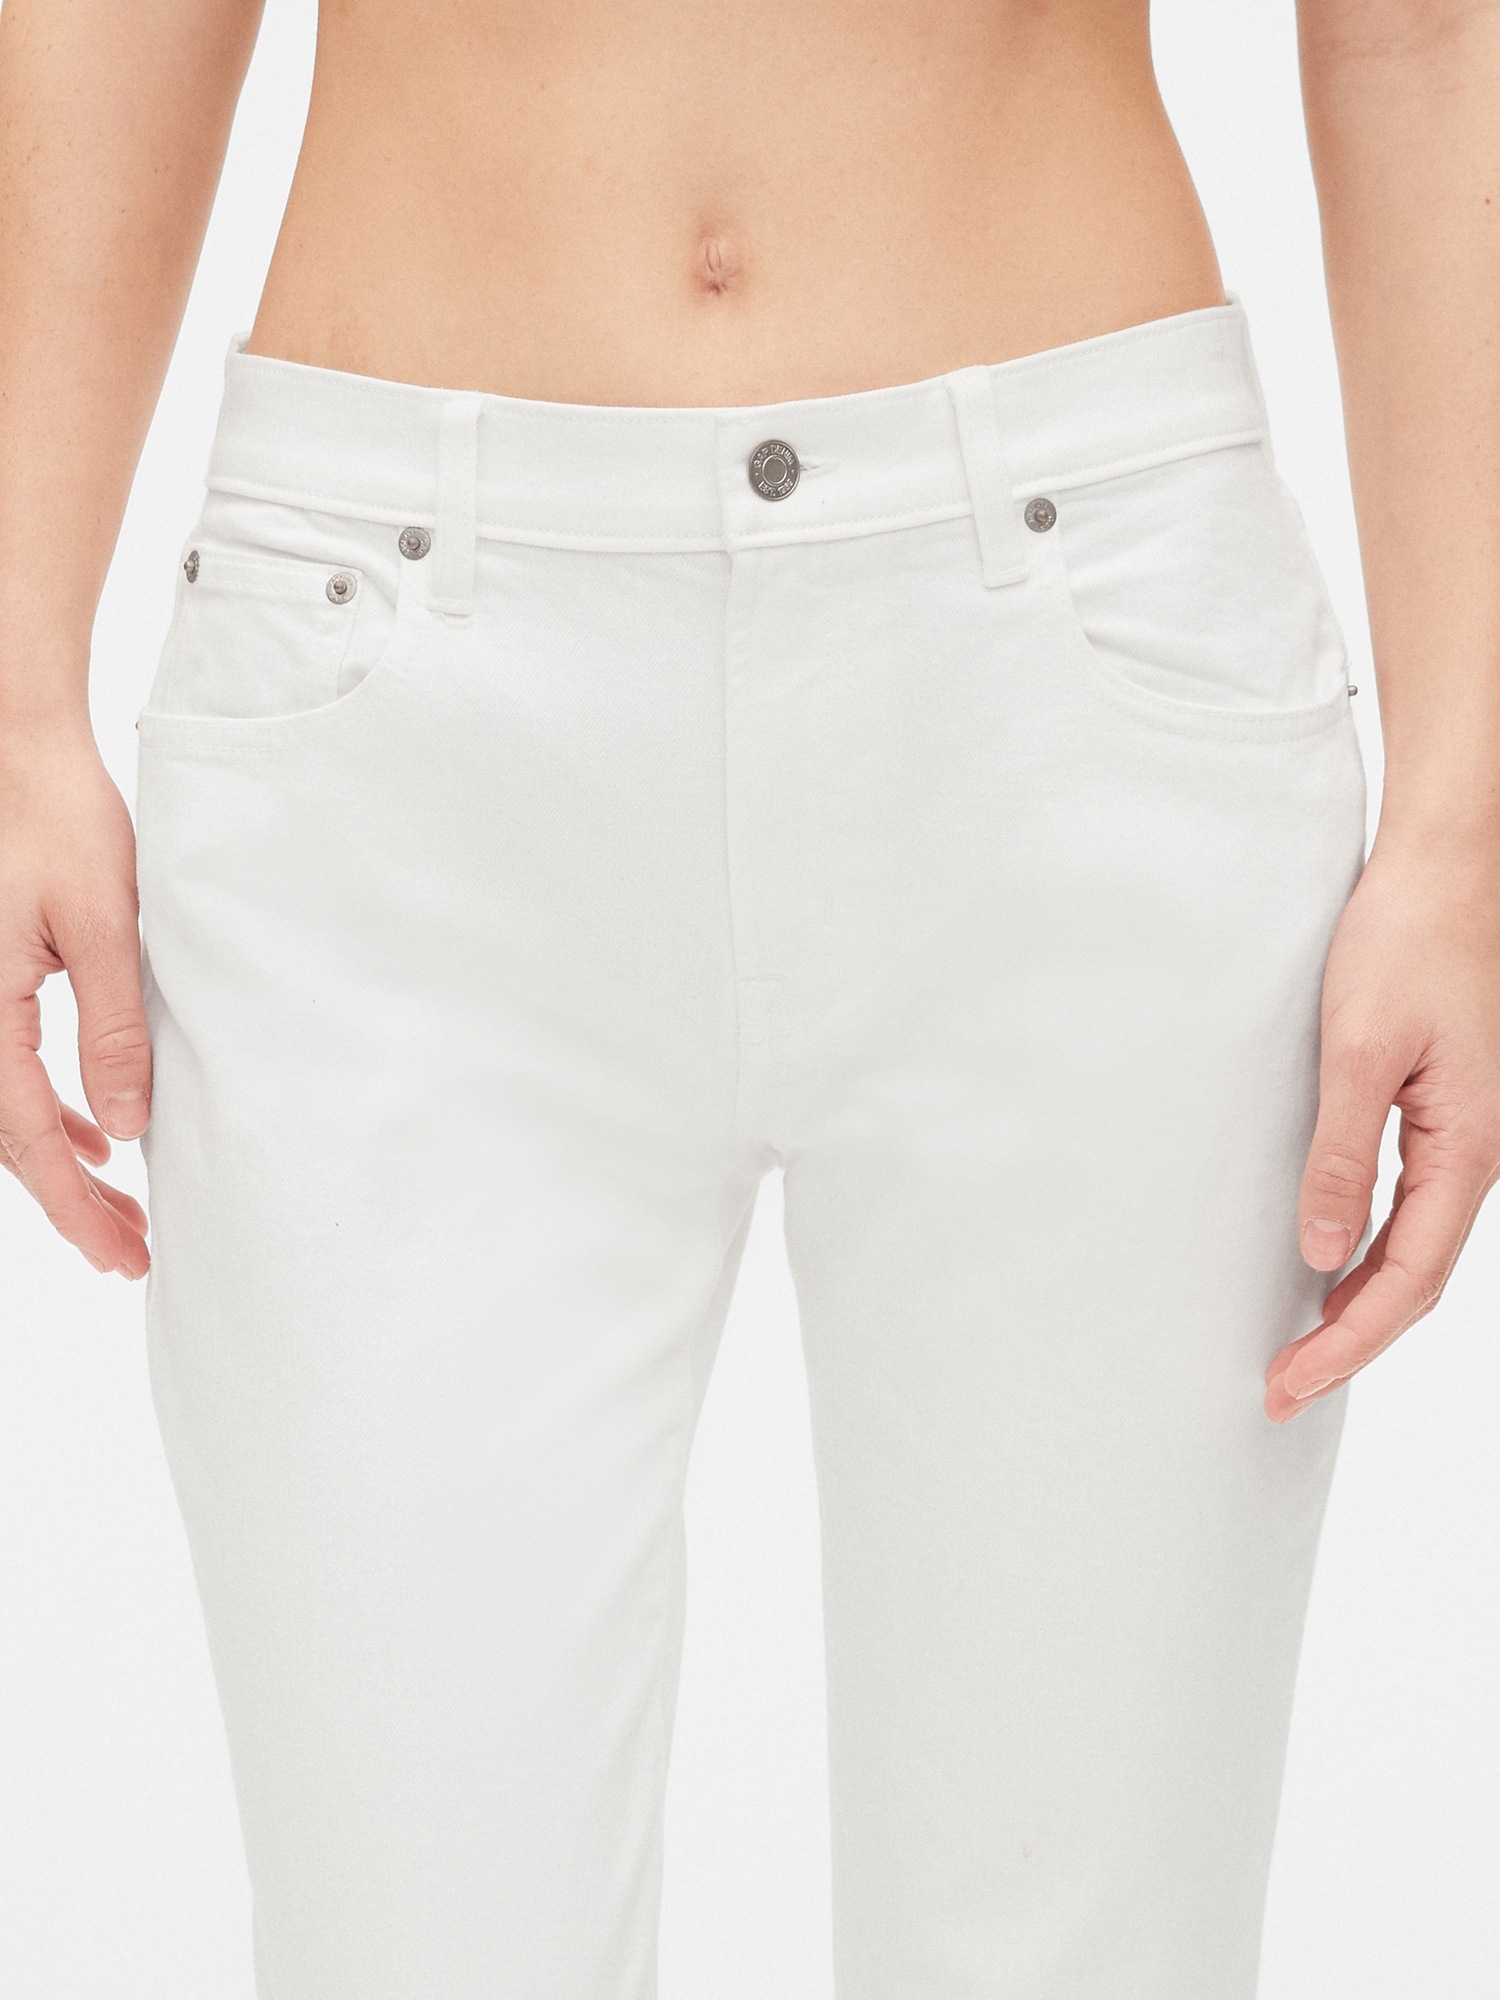 gap white girlfriend jeans